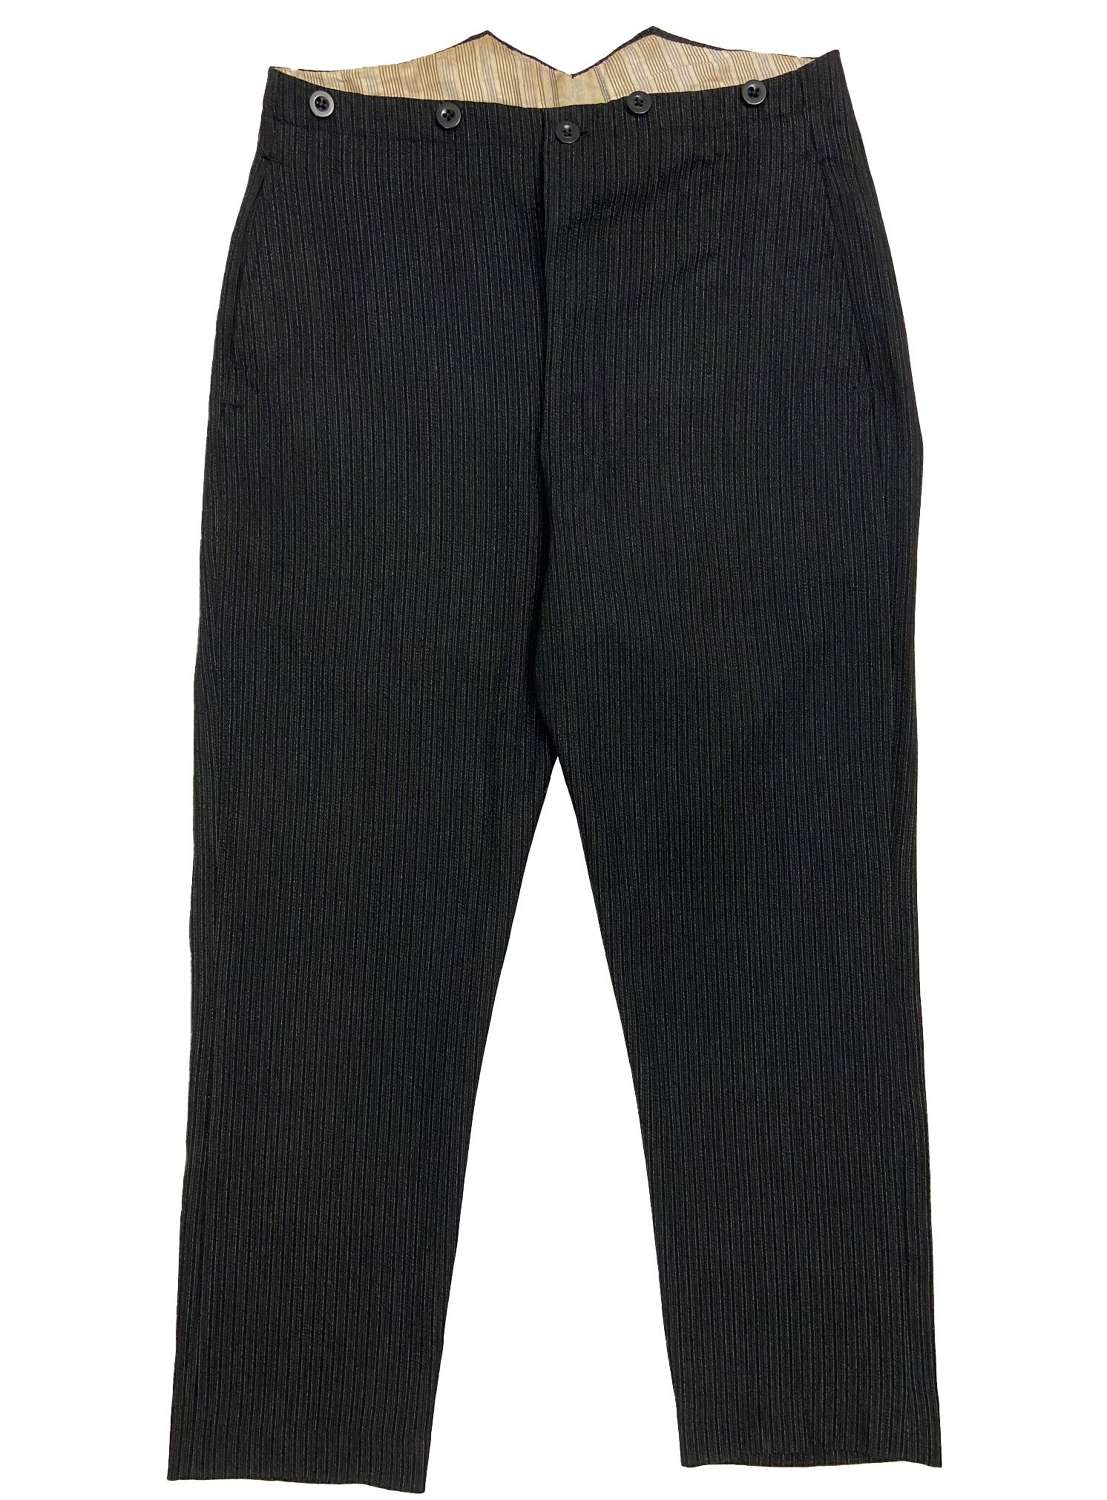 Original Edwardian Men's Striped Morning Trousers